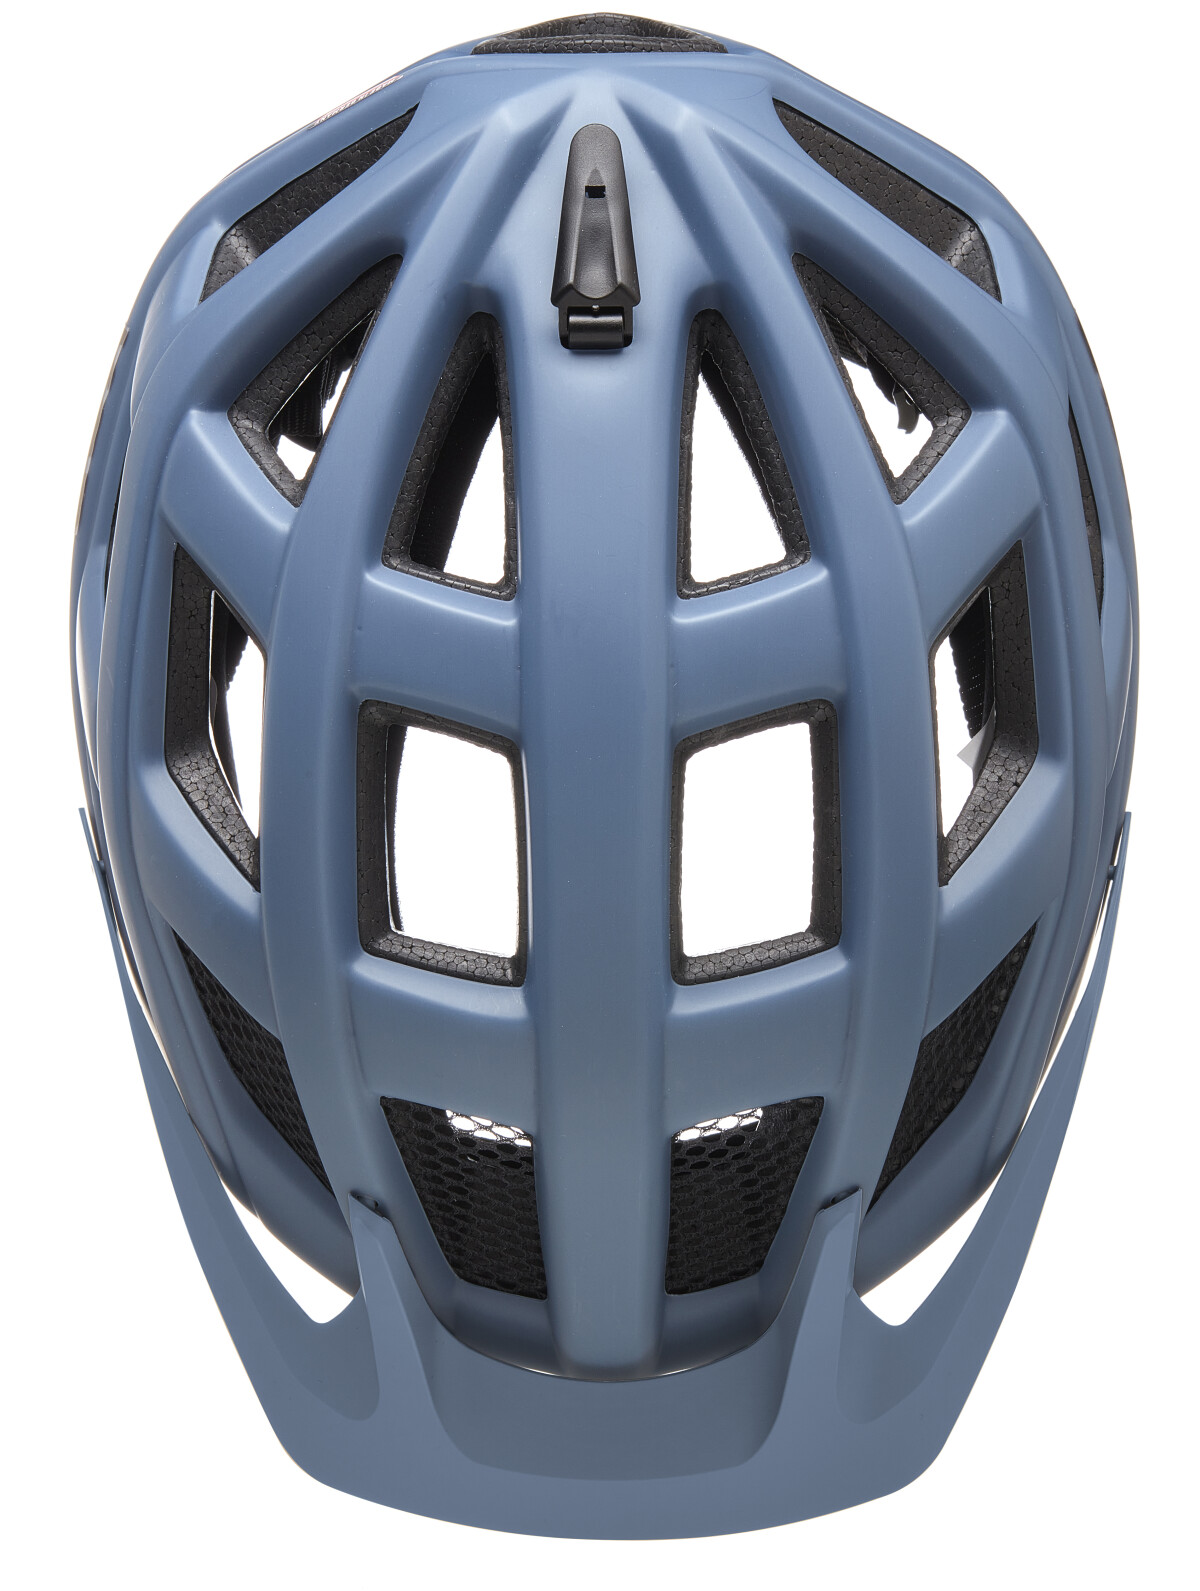 KED Helm Crom blue grey matt 52-58 cm